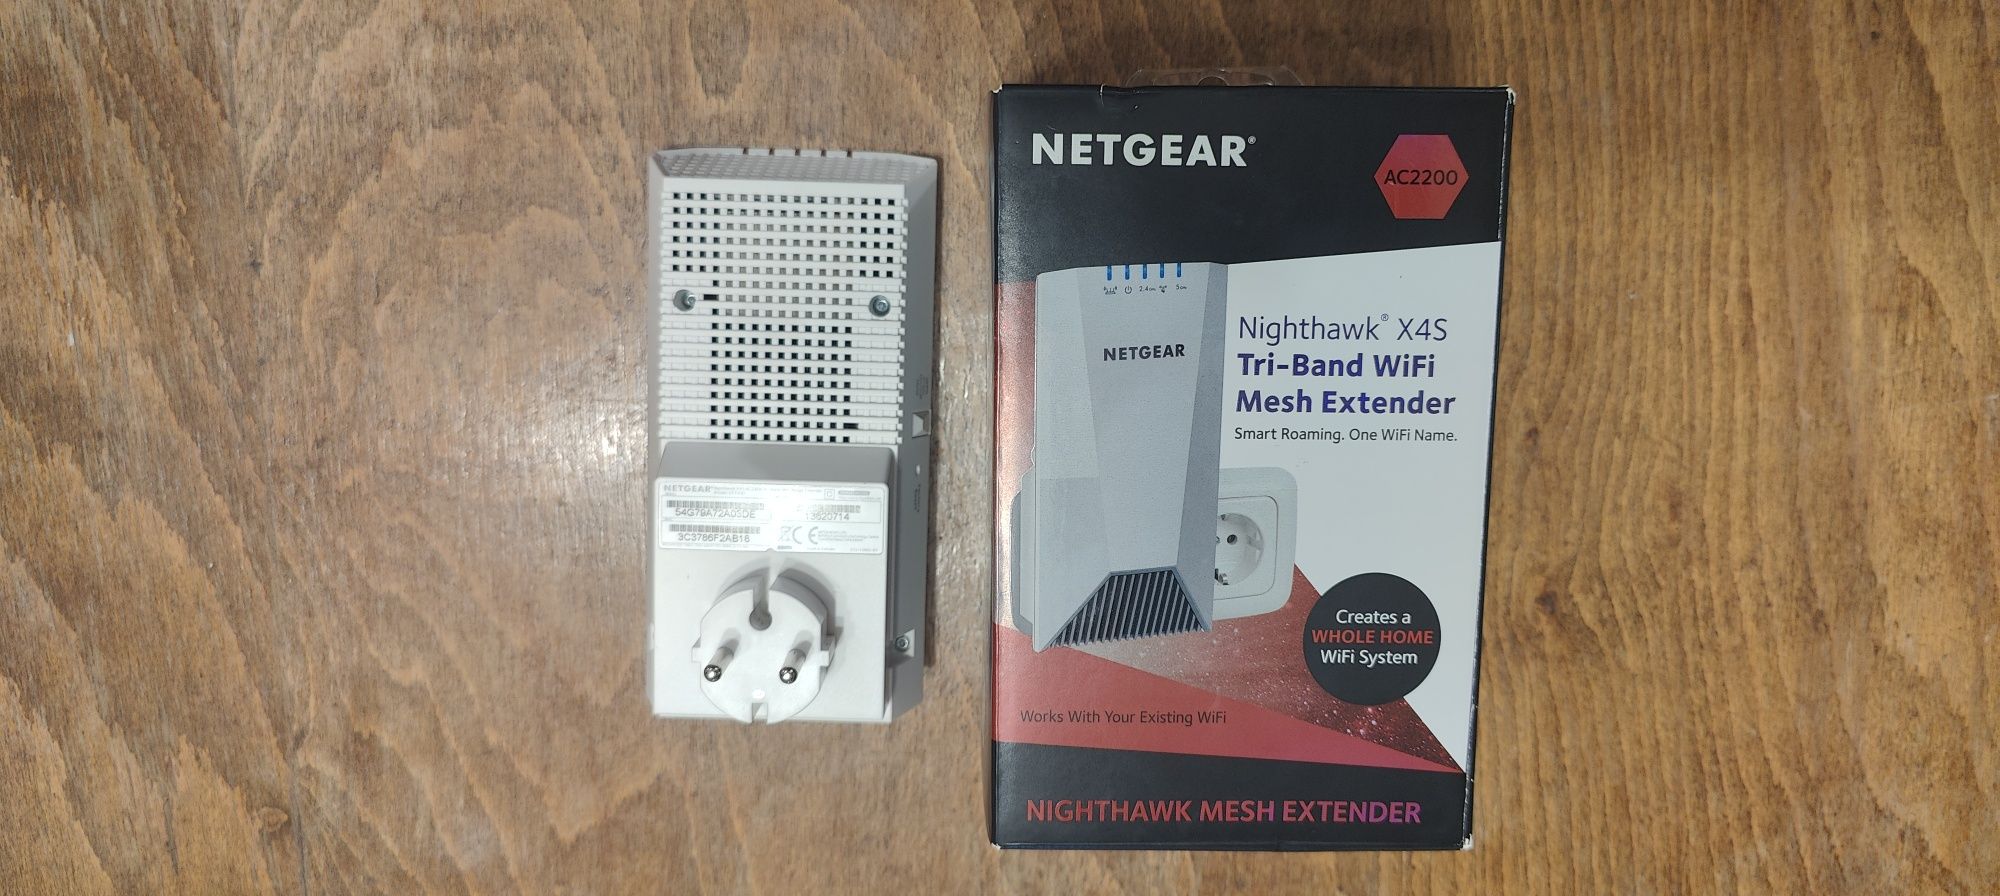 Netgear nighthawk x4s